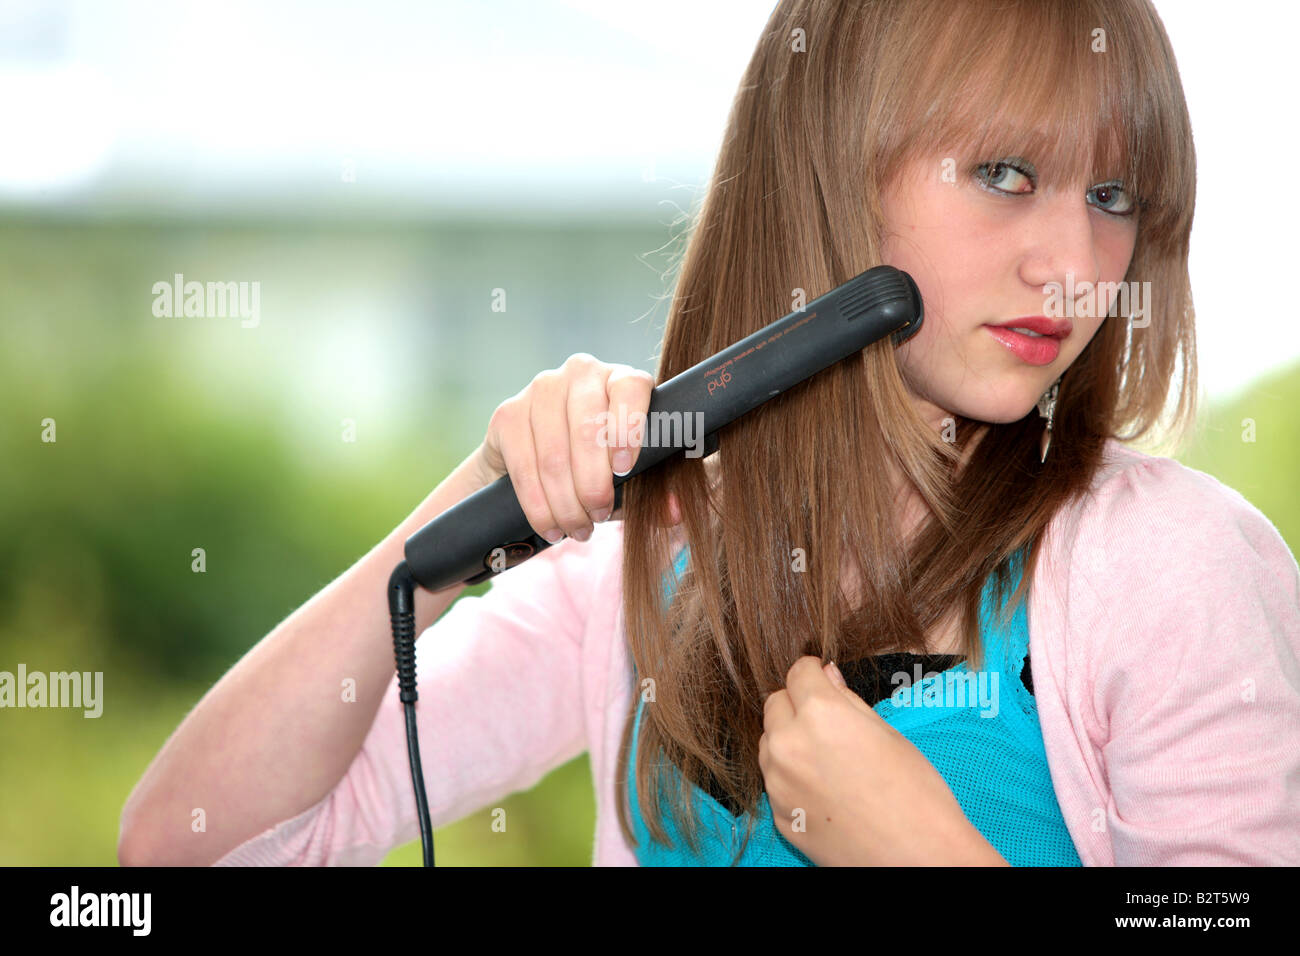 Teenage Girl Straightening Hair Model Released Stock Photo